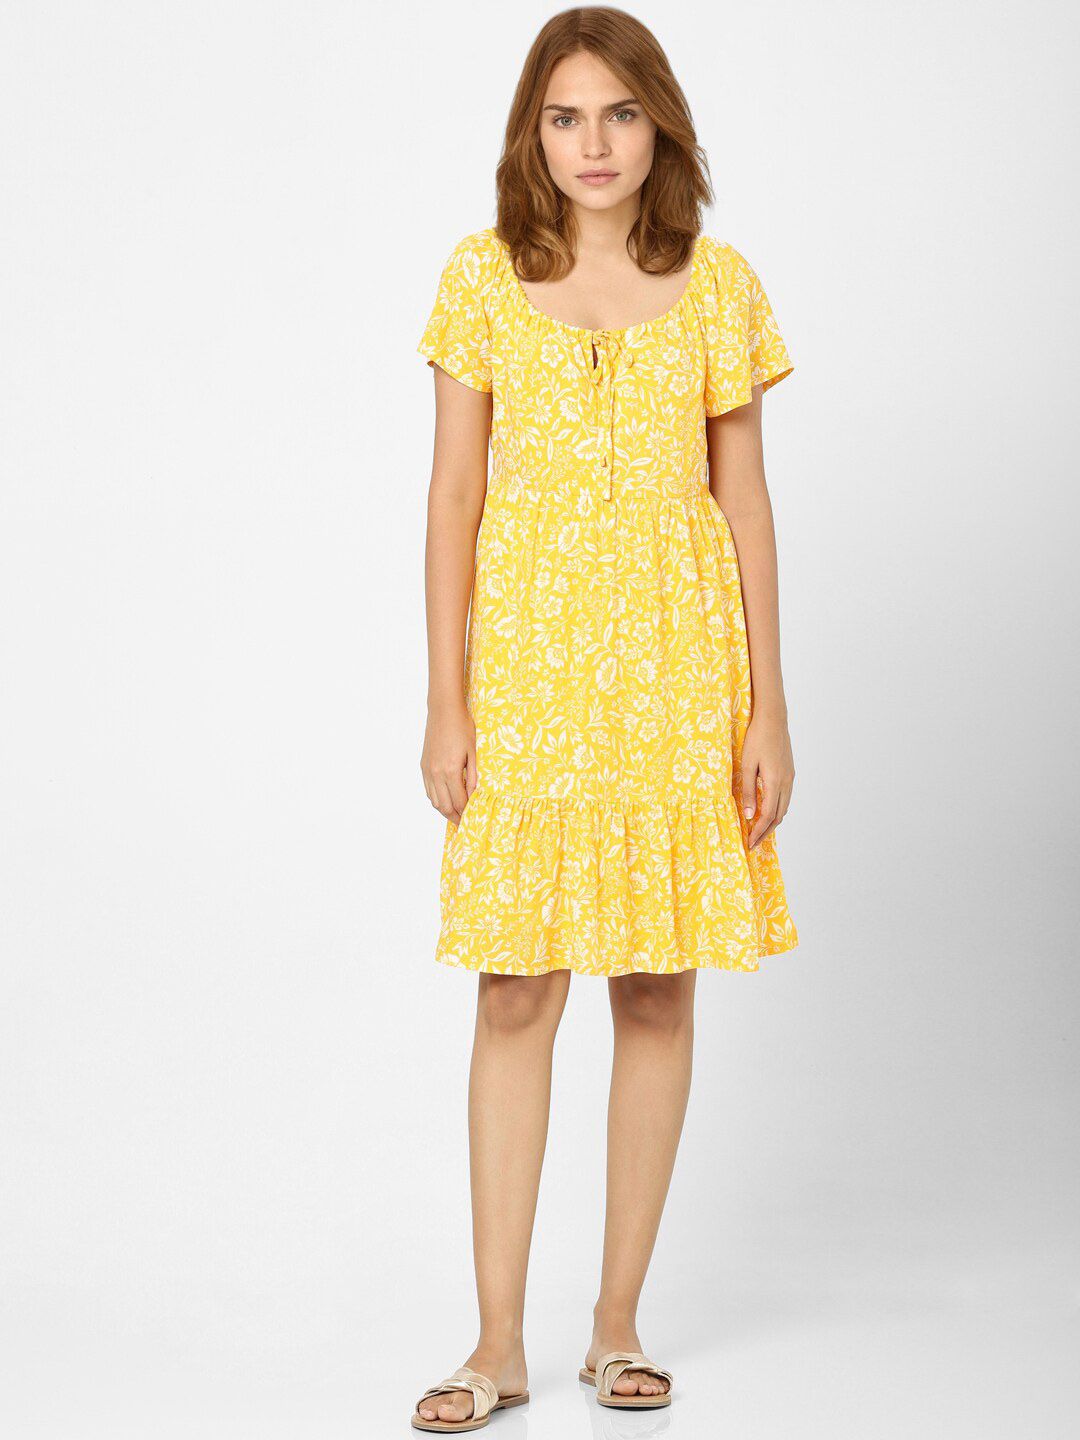 Vero Moda Yellow Floral A-Line Dress Price in India